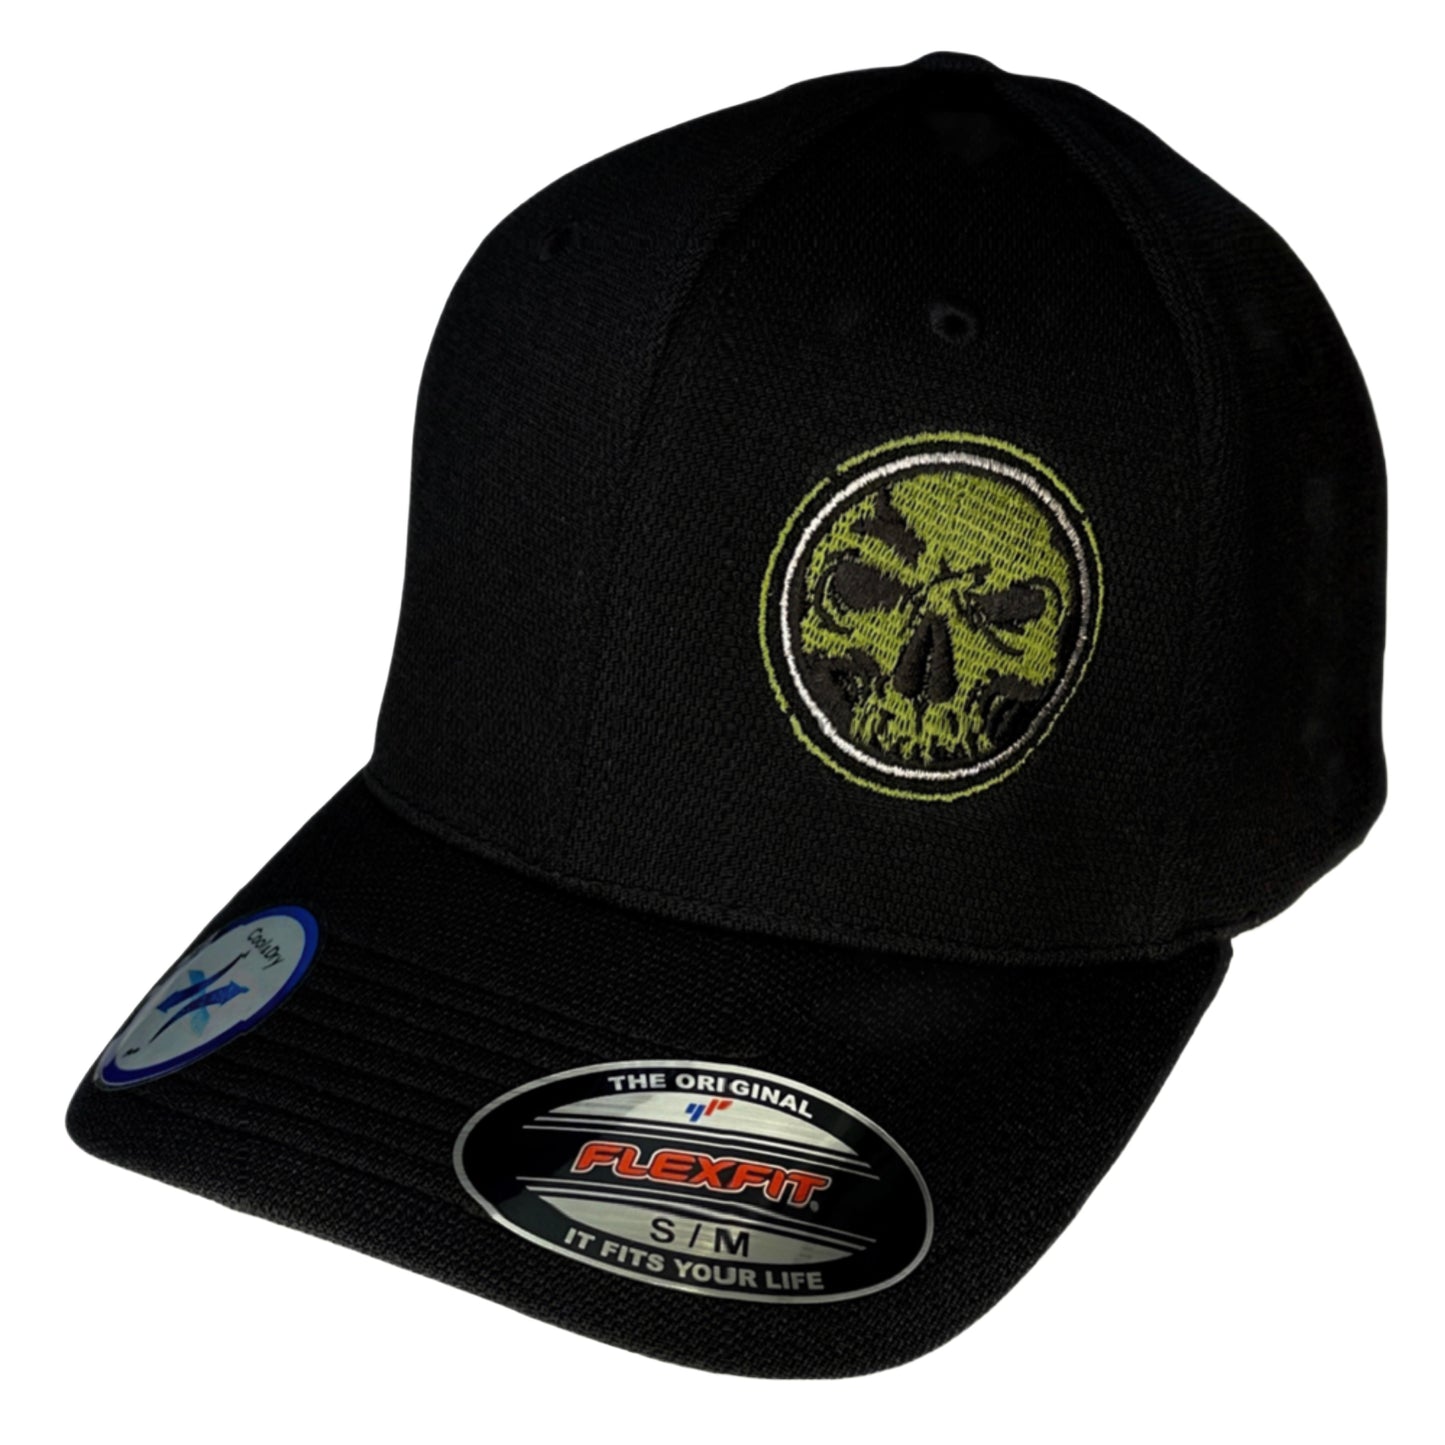 Flexfit "Never Fade" Black Hat - Military Green Skull